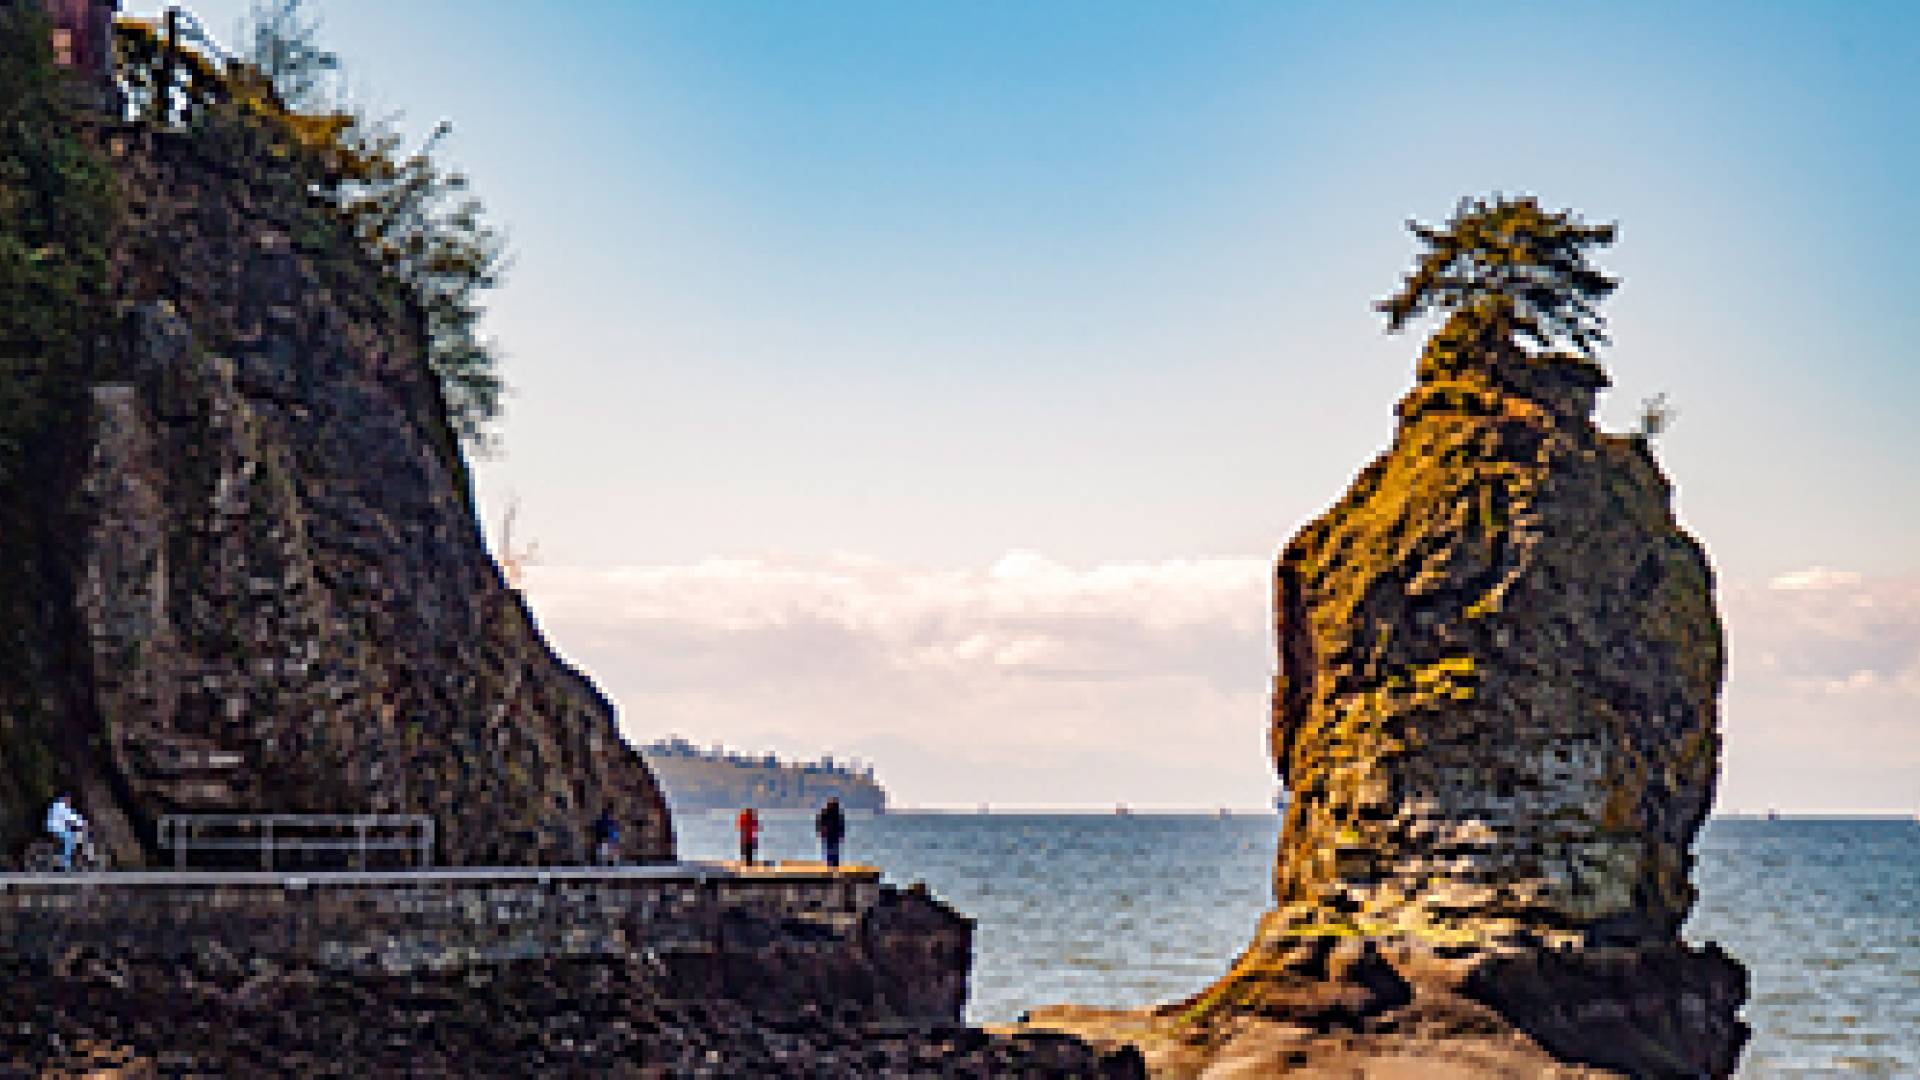 Siwash Rock at Stanley Park in Vancouver, B.C.